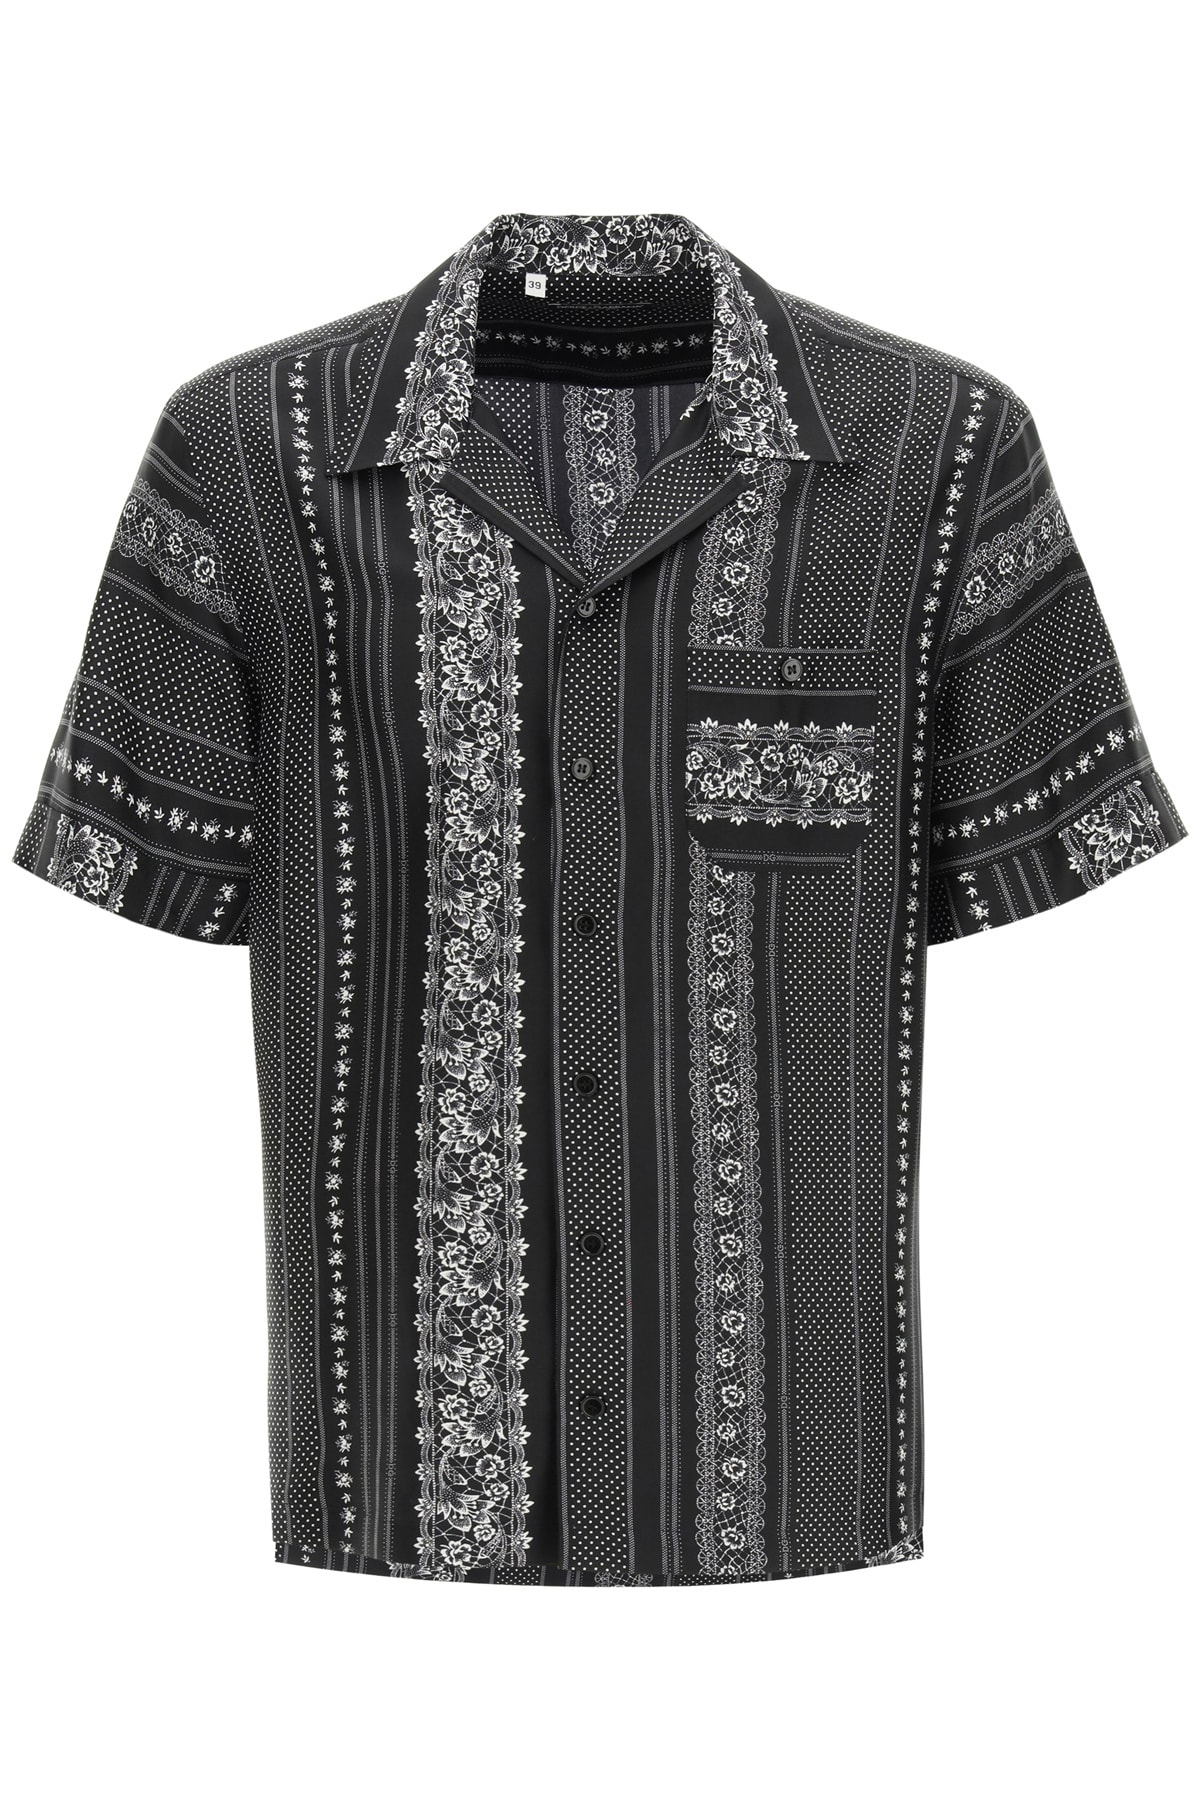 Dolce & Gabbana Geometric Print Bowling Shirt